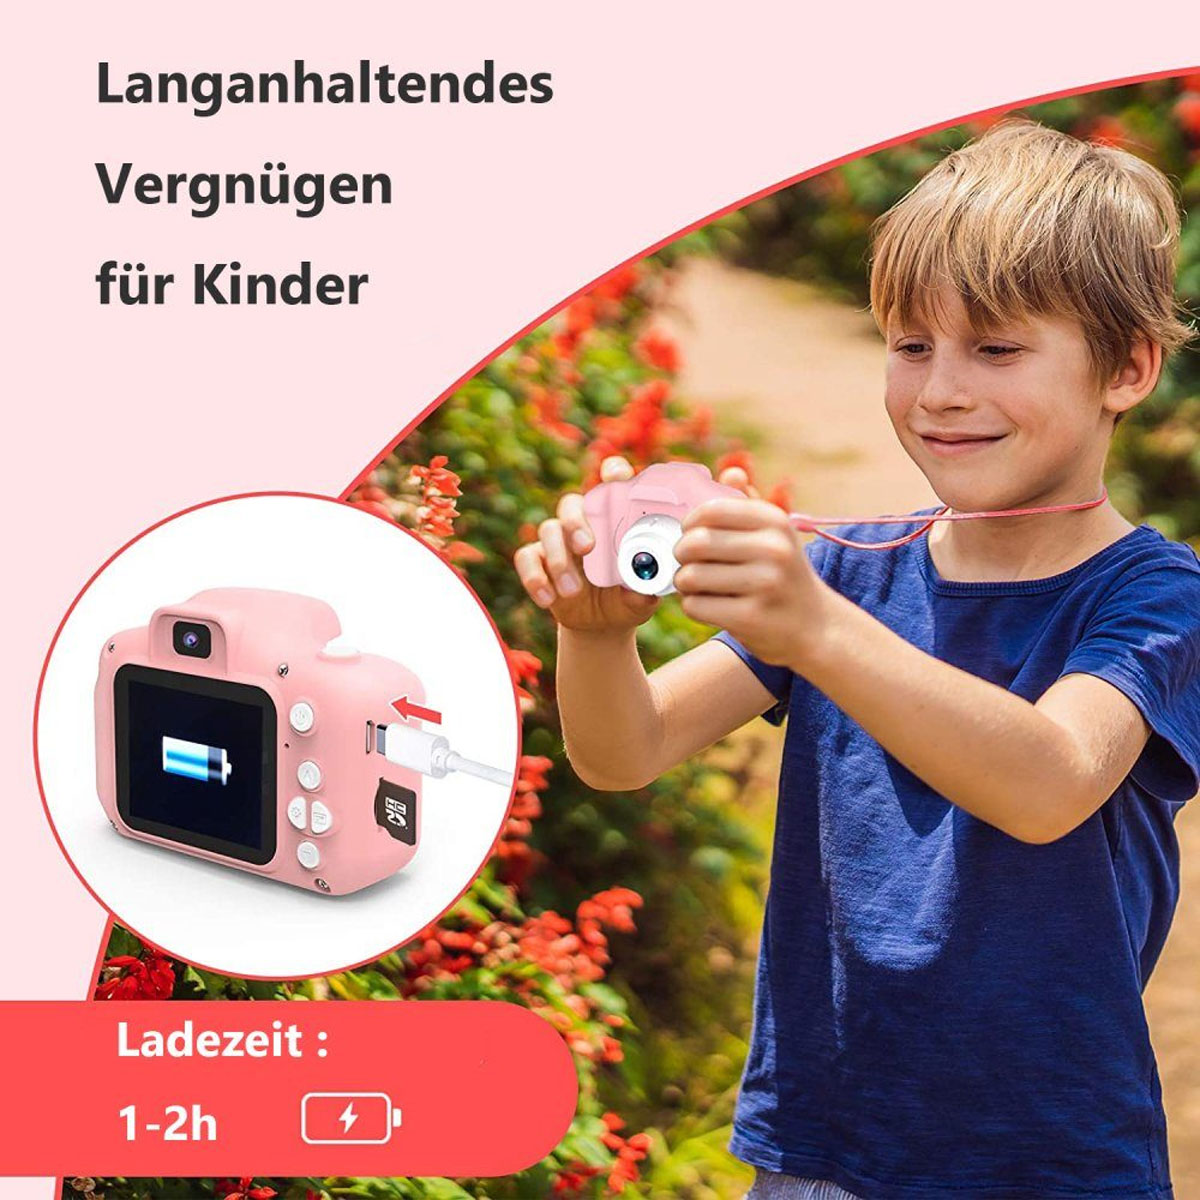 Kamera, Rosa Kompaktkameras, Spielzeug-Kamera Kinder DSLR-Kamera, KINSI Kinderkamera LCD Kreative